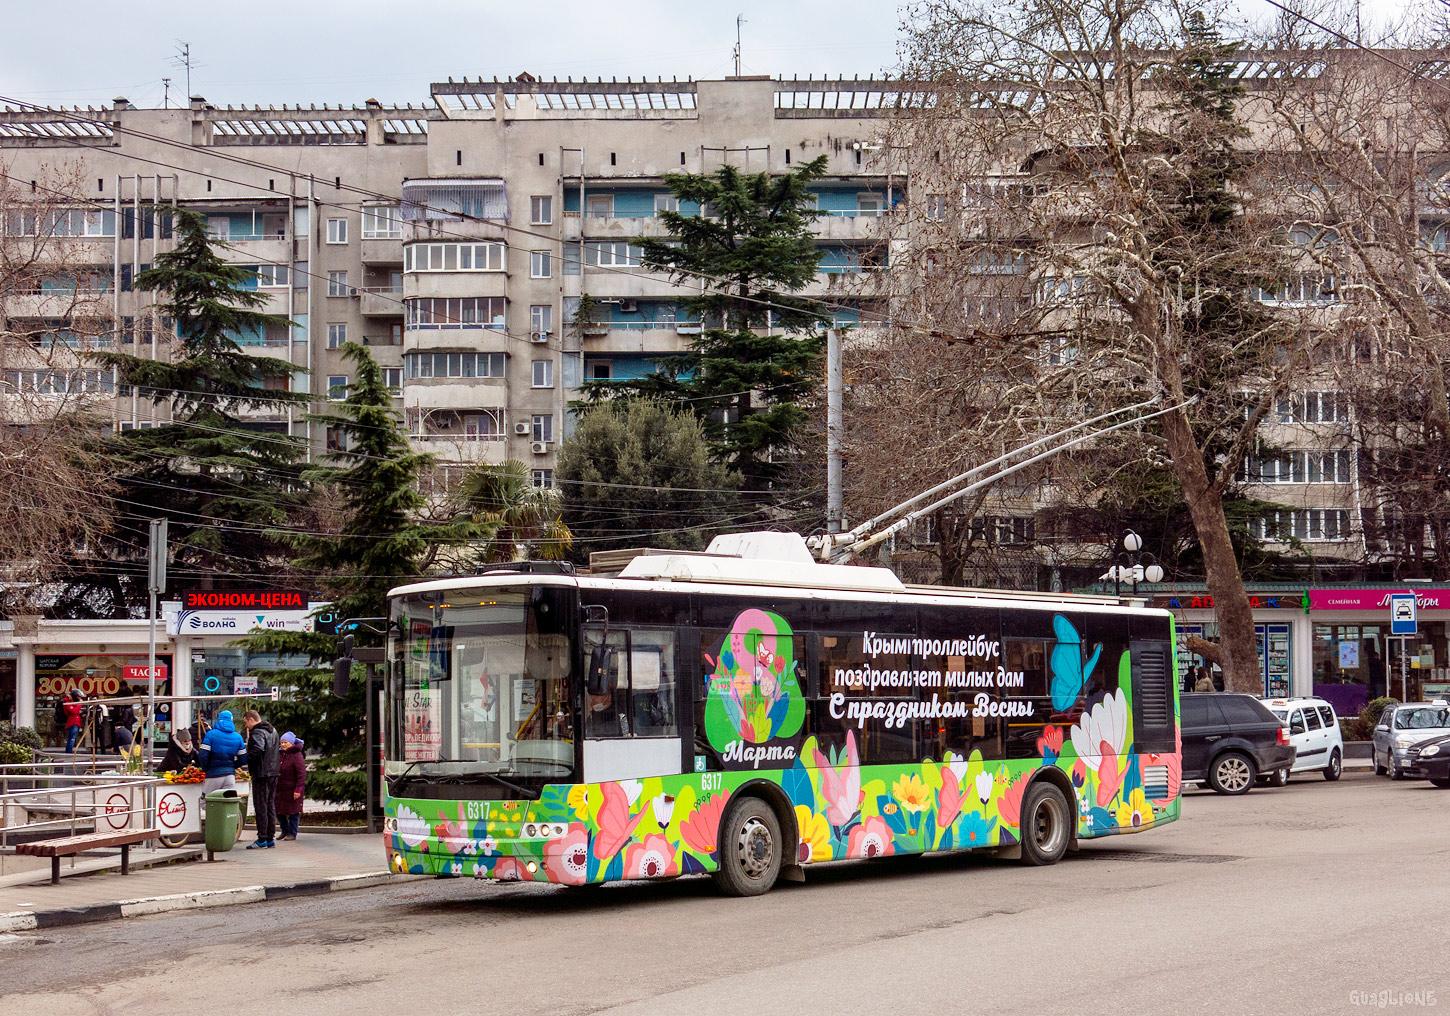 Крымский троллейбус, Богдан Т60111 № 6317